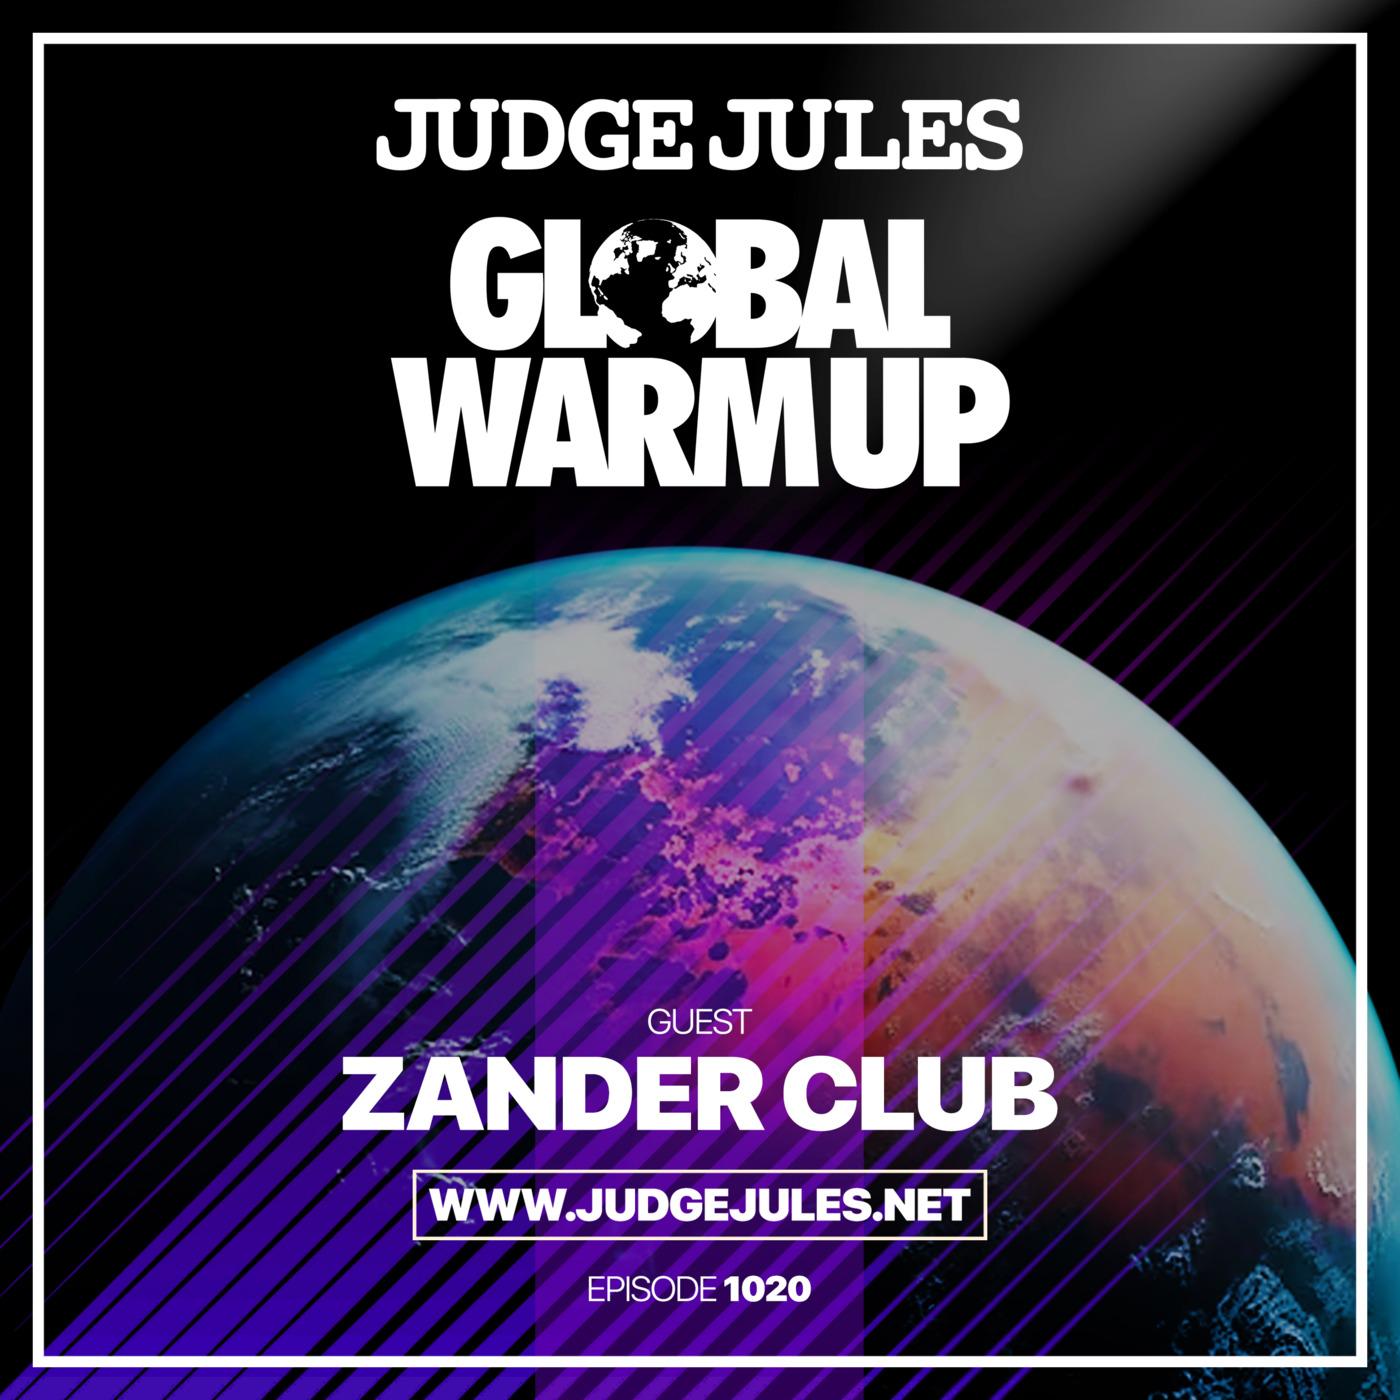 Episode 1020: JUDGE JULES PRESENTS THE GLOBAL WARM UP EPISODE 1020